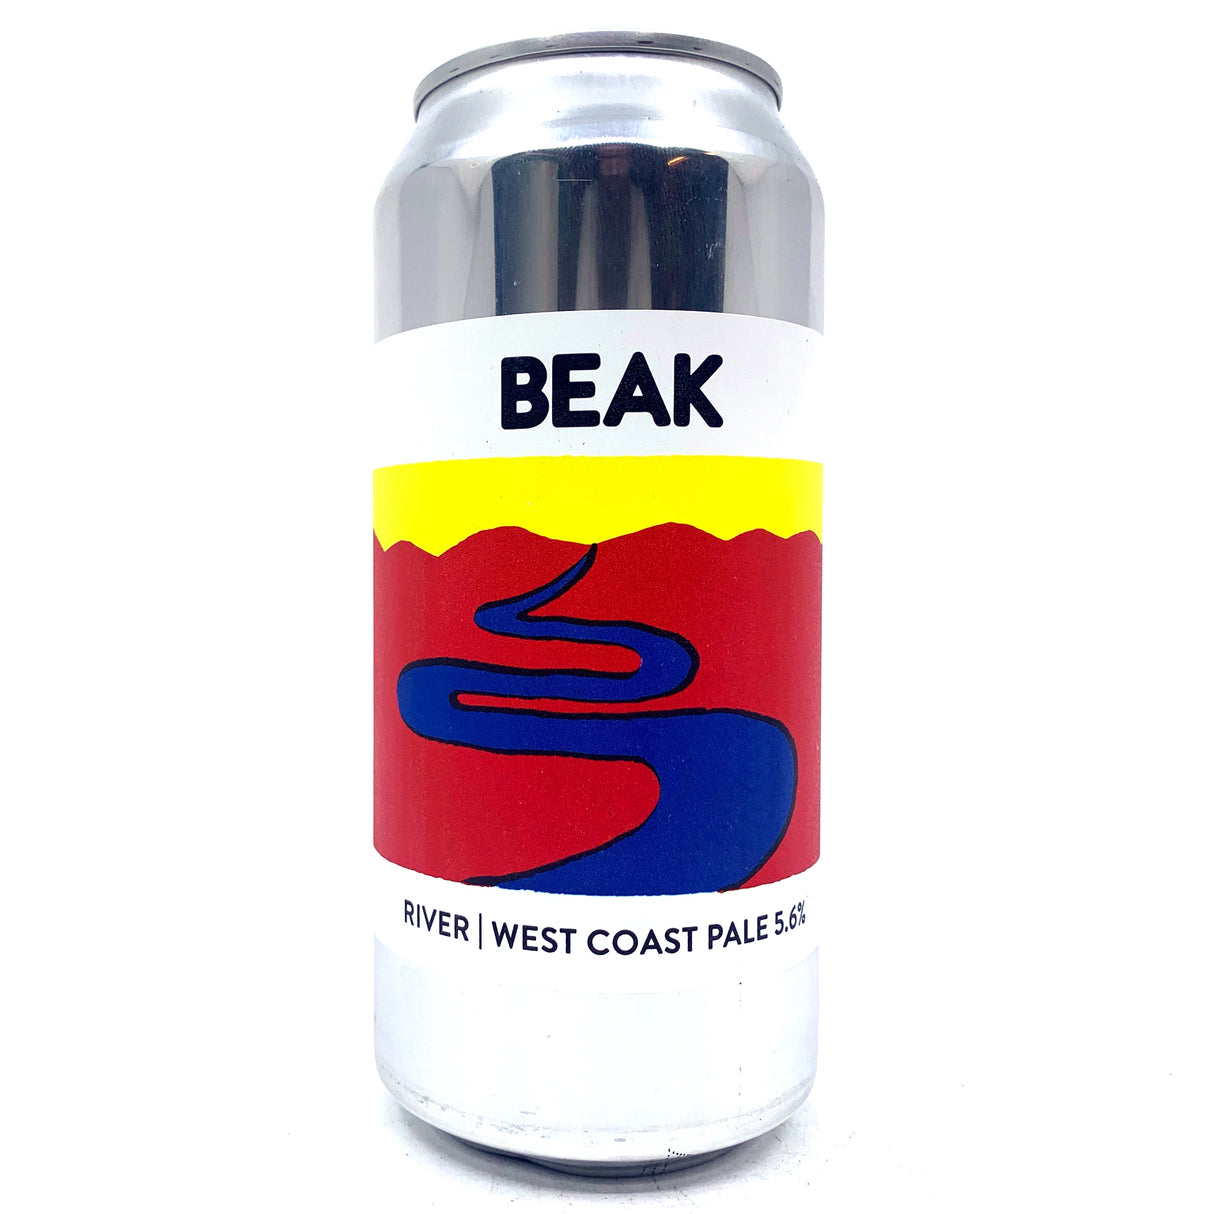 Beak Brewery River West Coast Pale Ale 5.6% (440ml can)-Hop Burns & Black